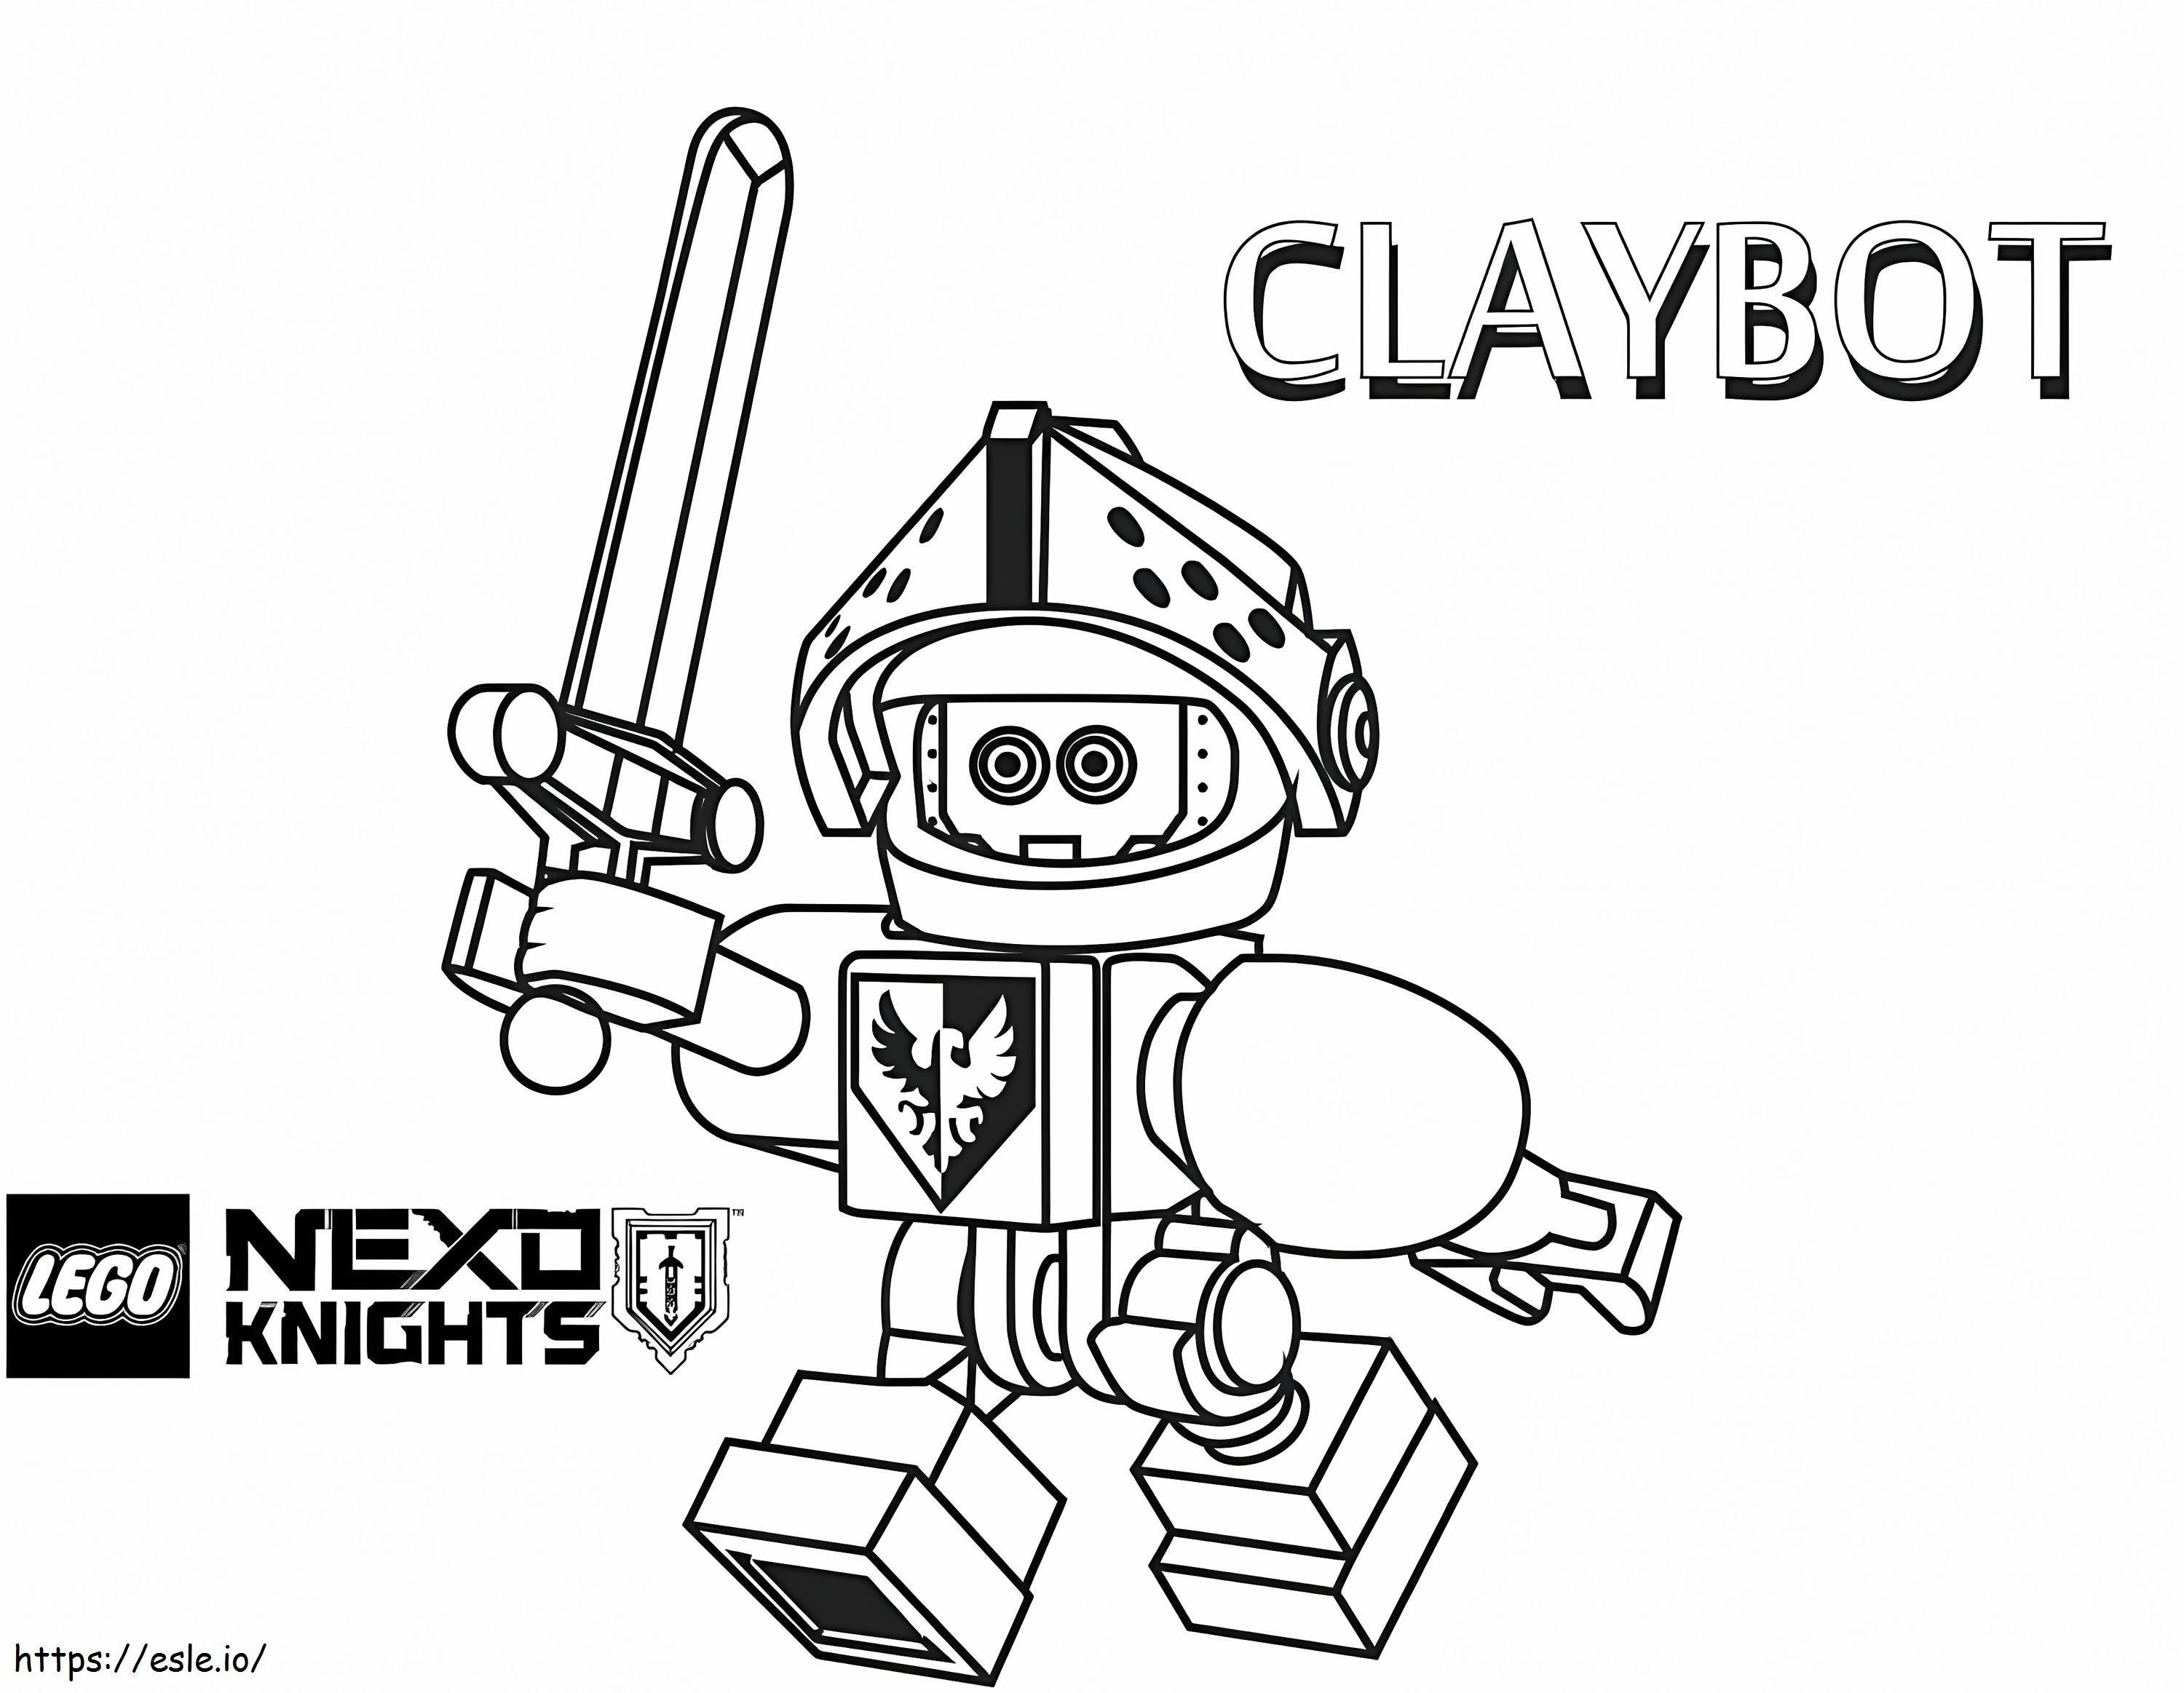 Claybo de Nexo Knights para colorear